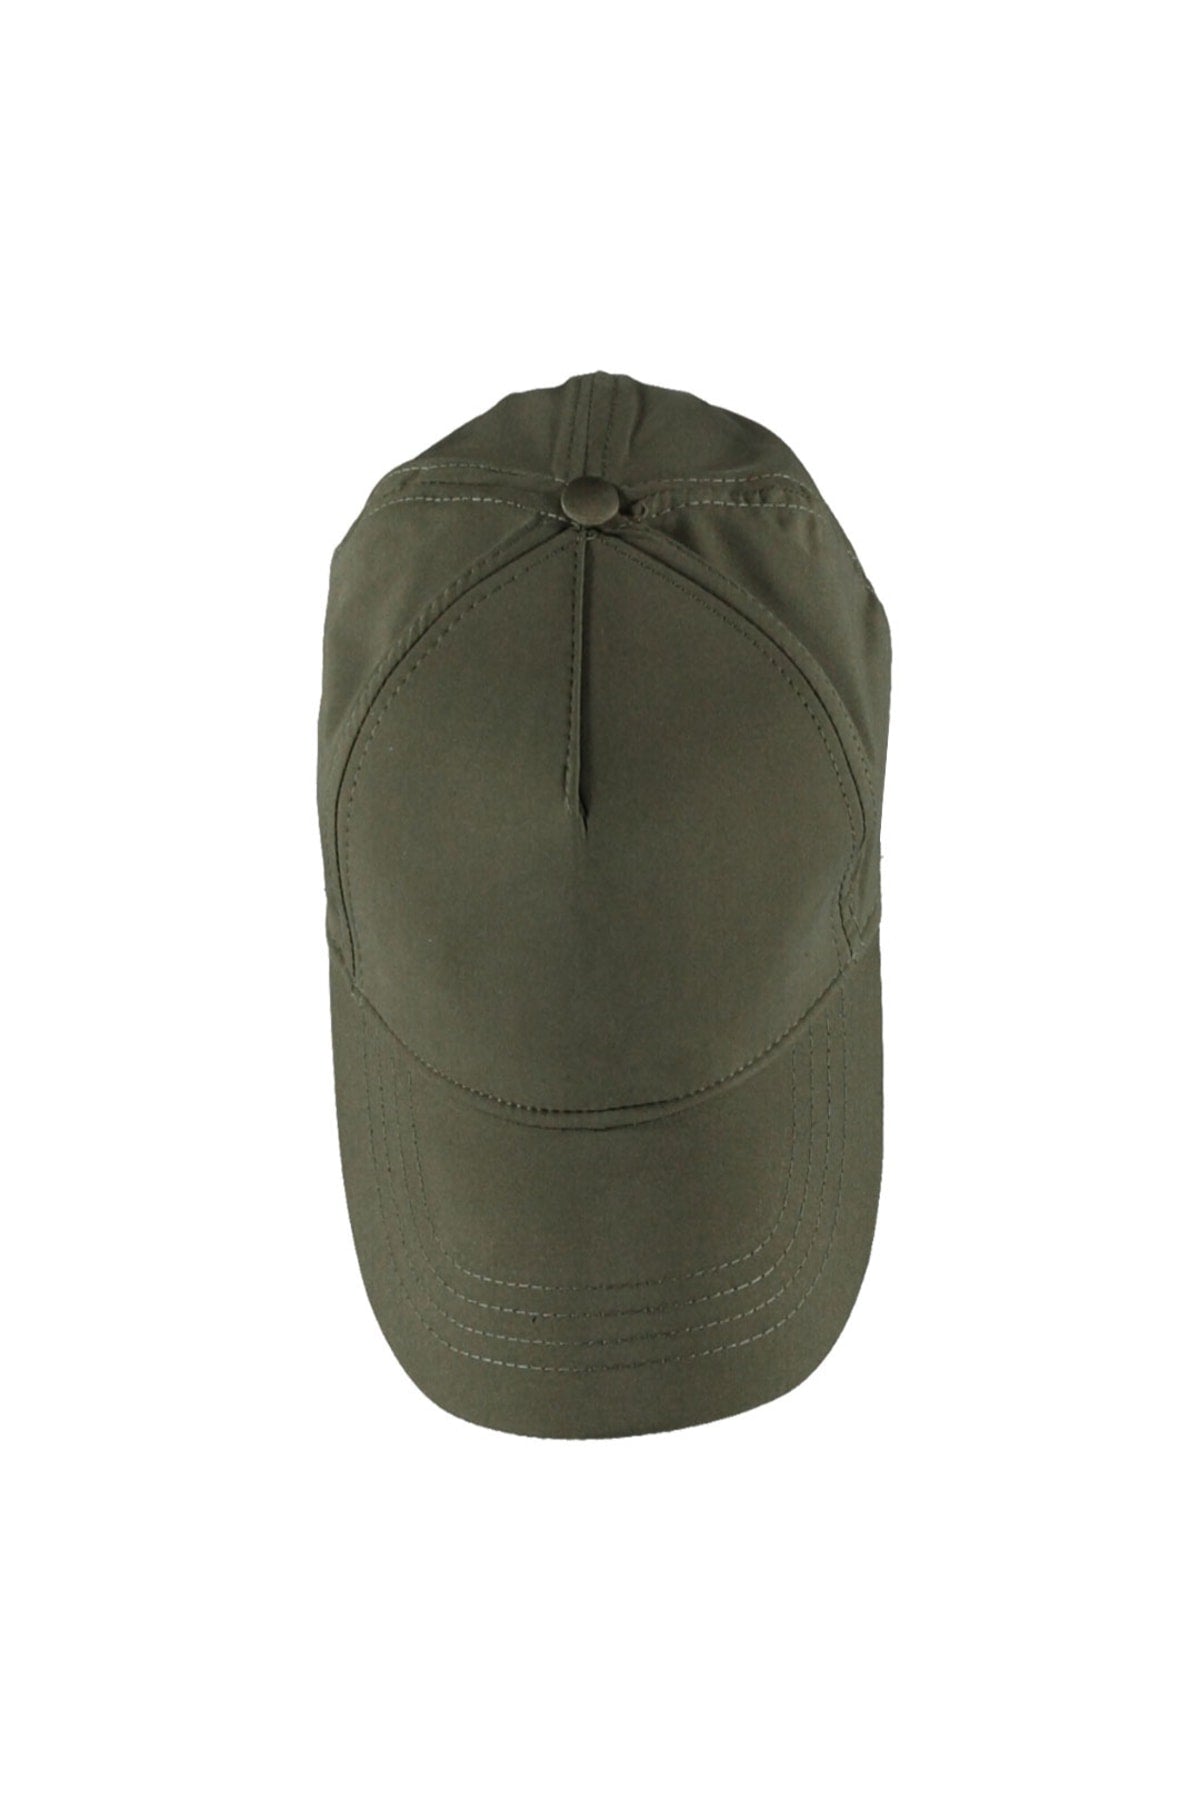 Summer Baseball Khaki Hat Adjustable Velcro Back